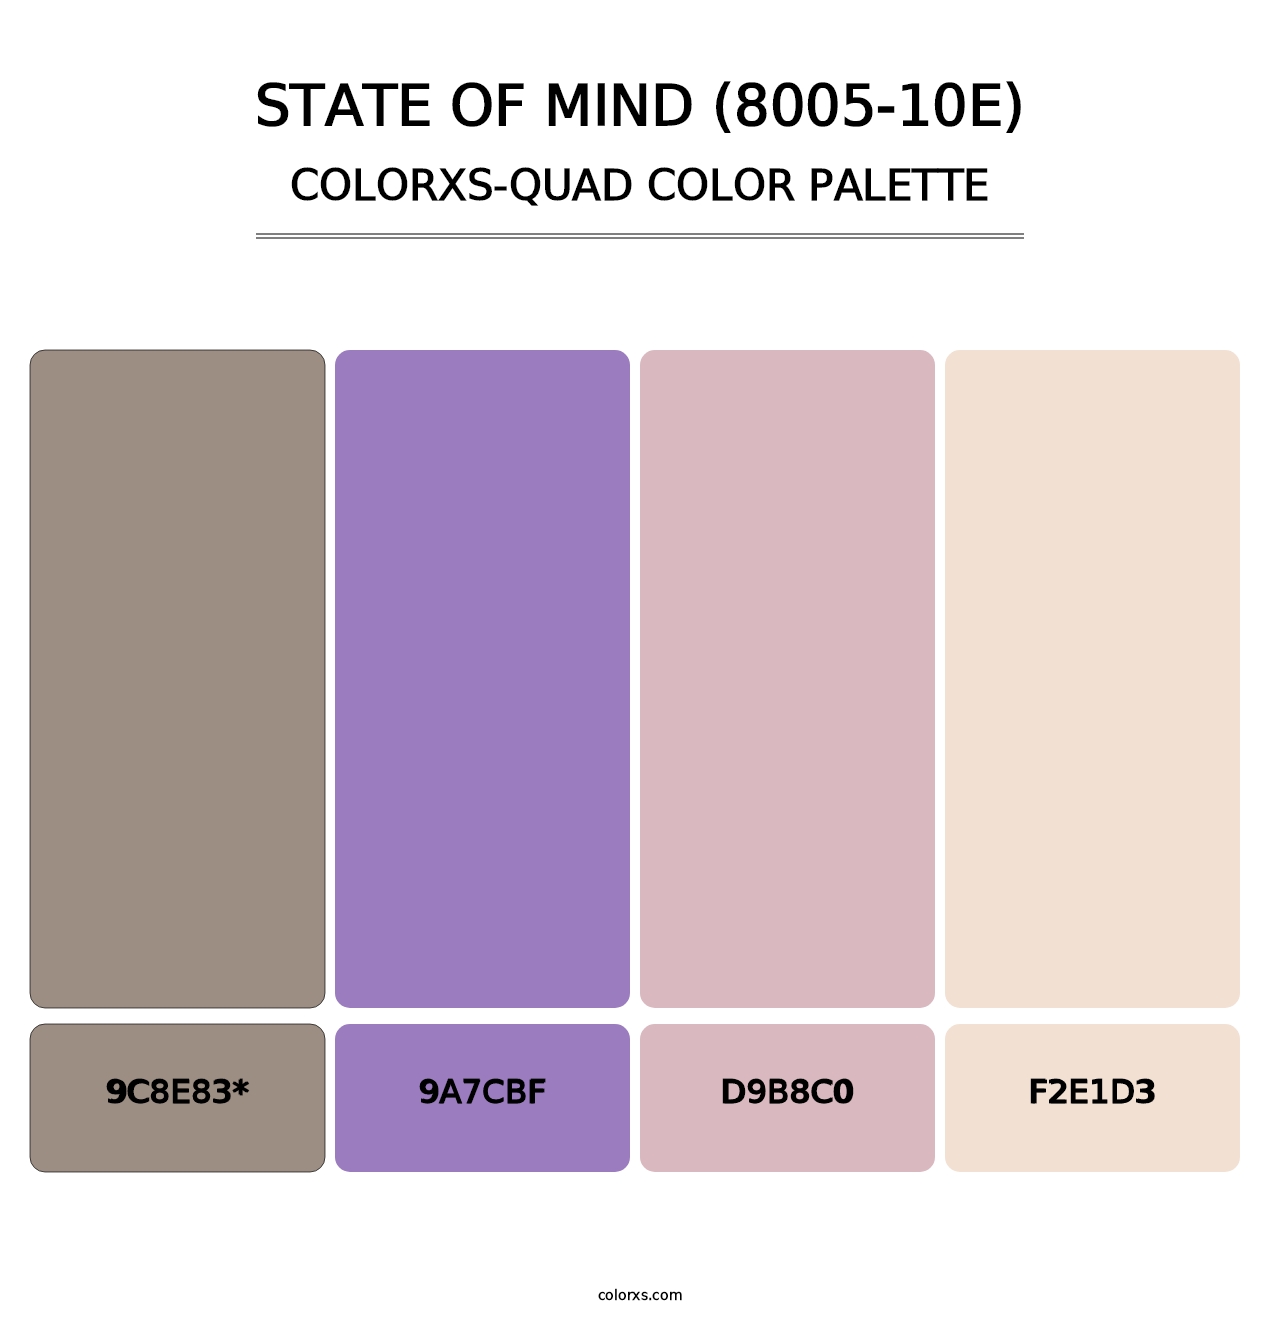 State of Mind (8005-10E) - Colorxs Quad Palette